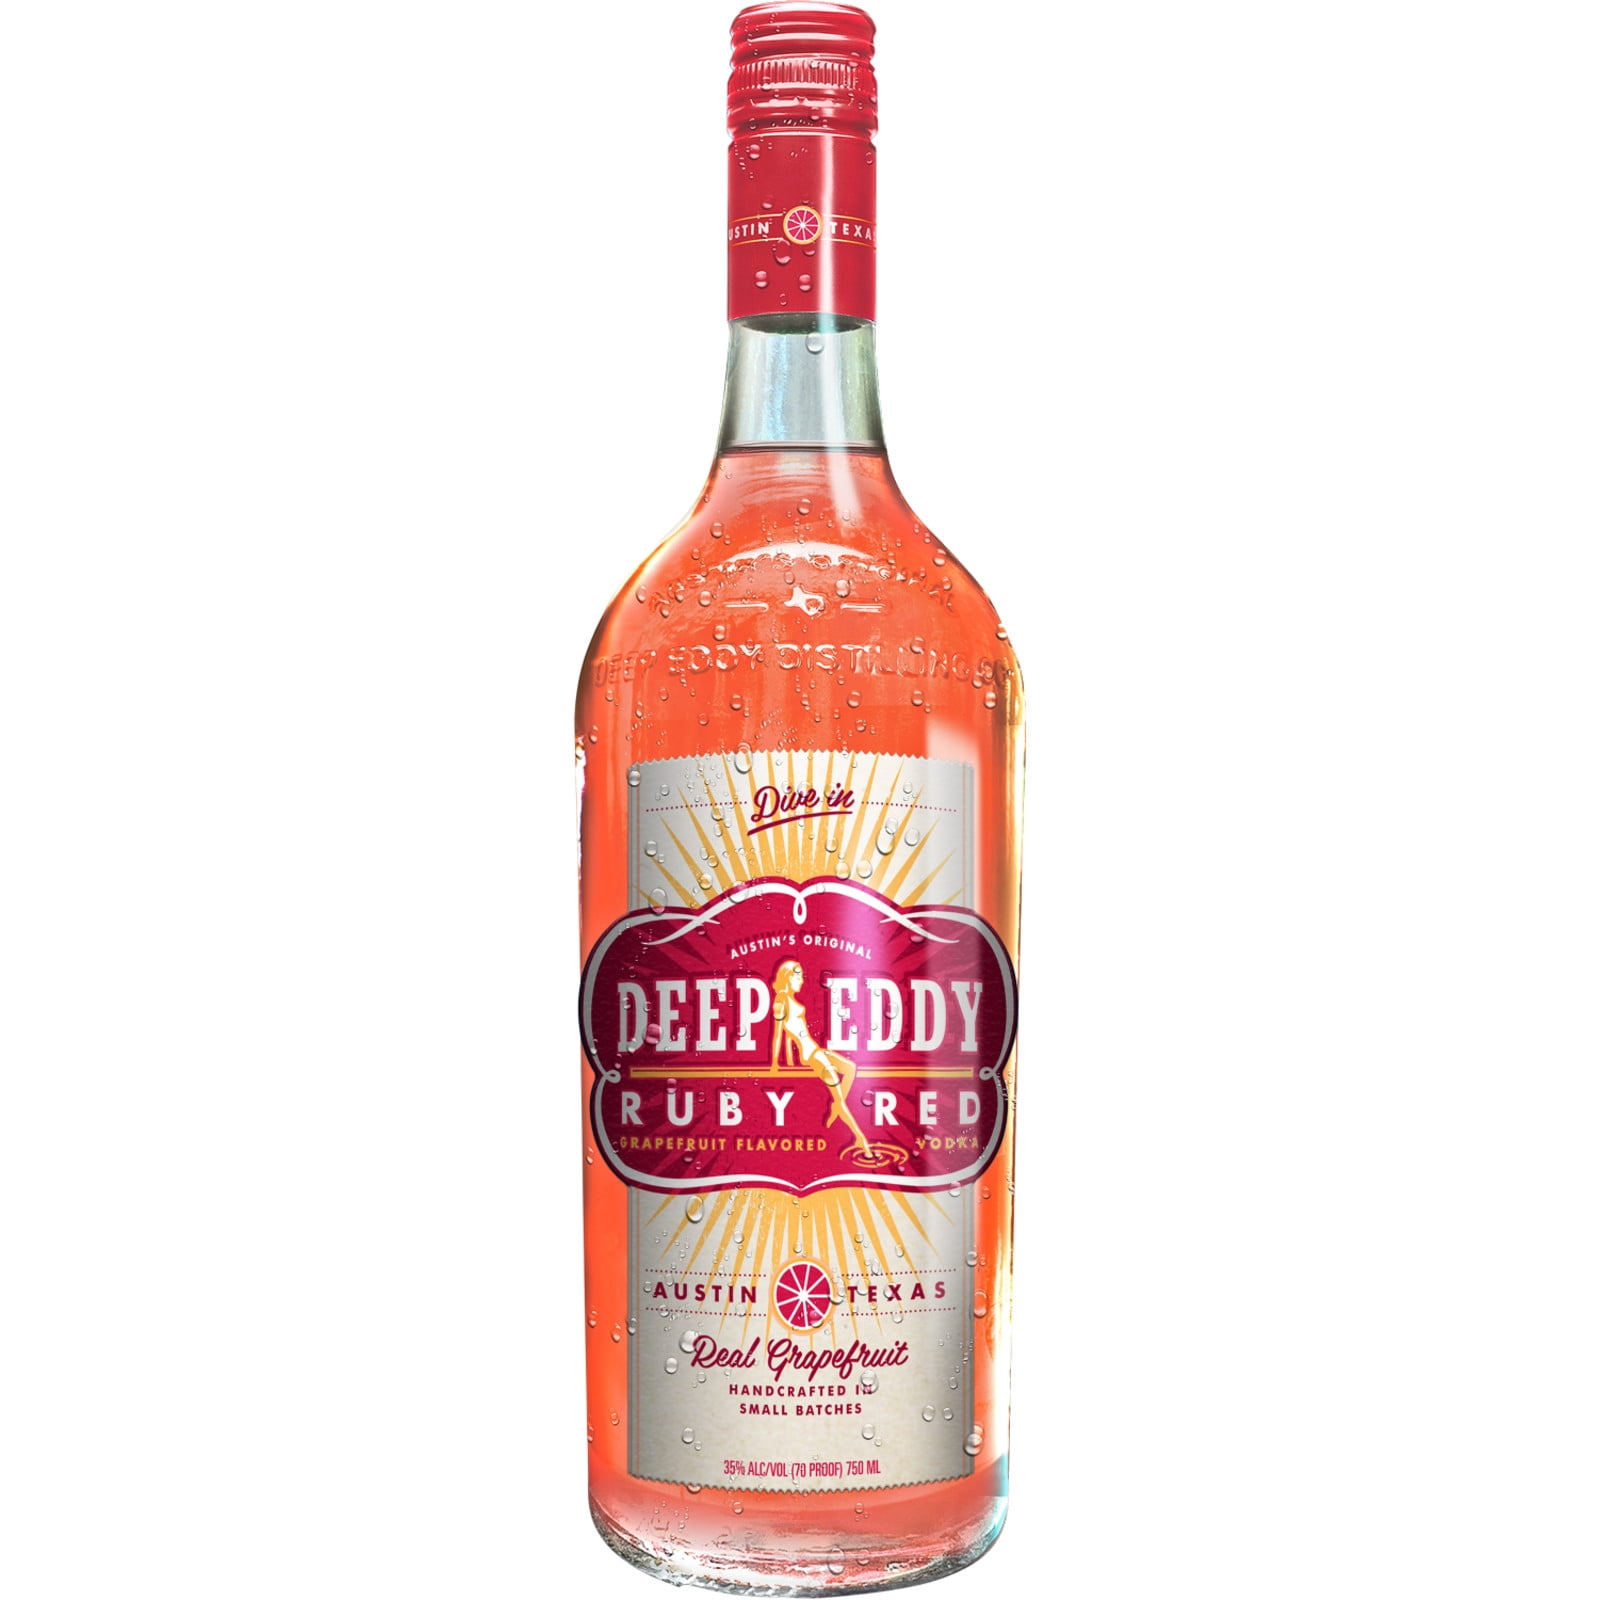 Larry Belmont lys s flaske Deep Eddy Ruby Red Grapefruit Flavored Vodka, 750 ml Bottle, ABV 35.0% -  Walmart.com